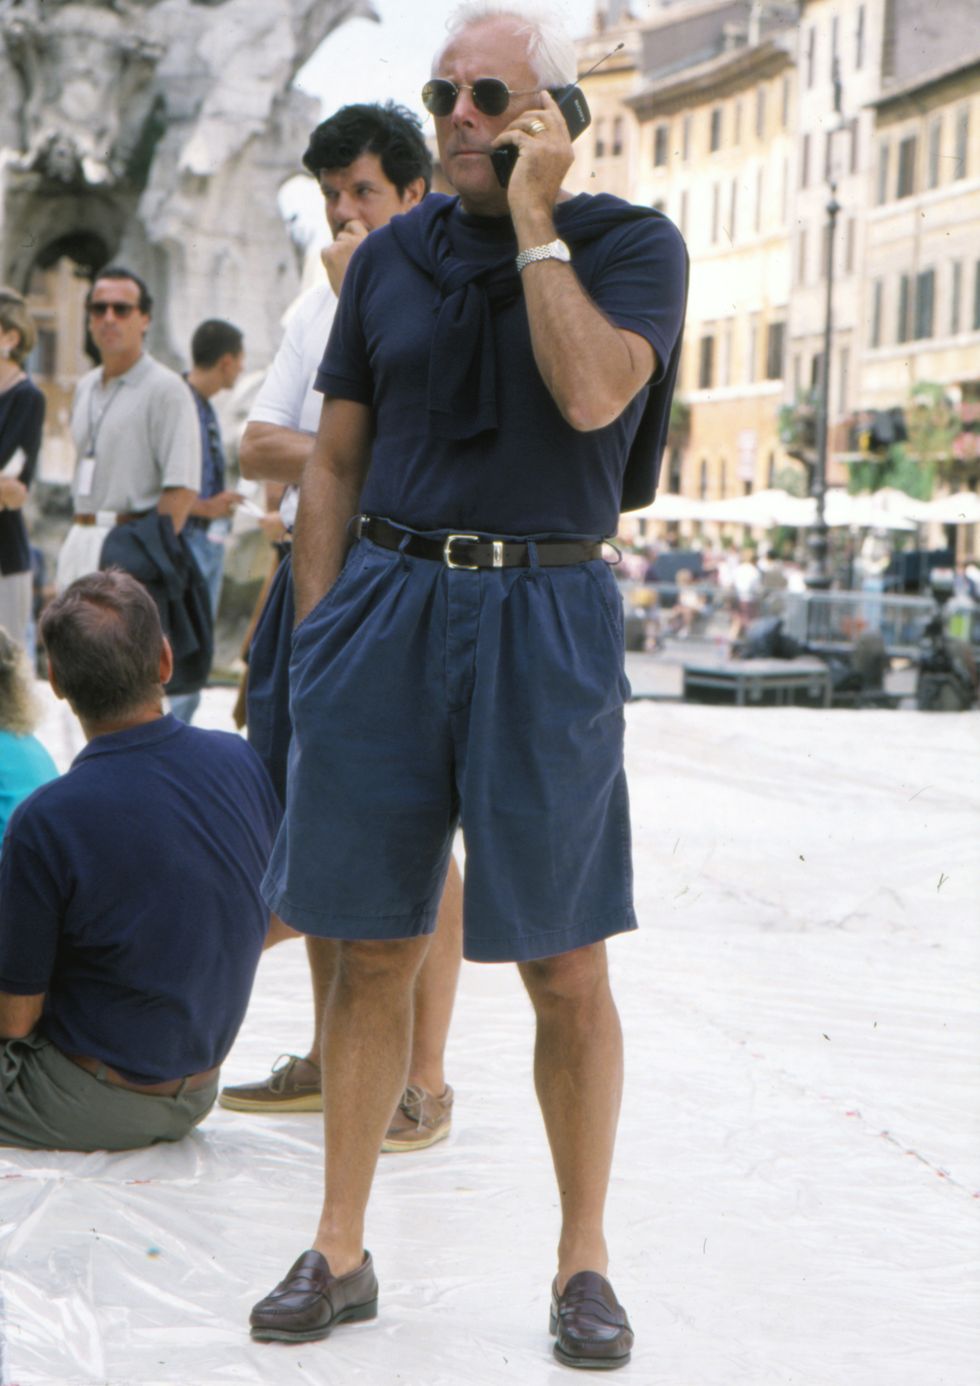 italian fashion designer giorgio armani speaking on his mobile phone 1990s photo by archivio apgmondadori portfolio via getty images